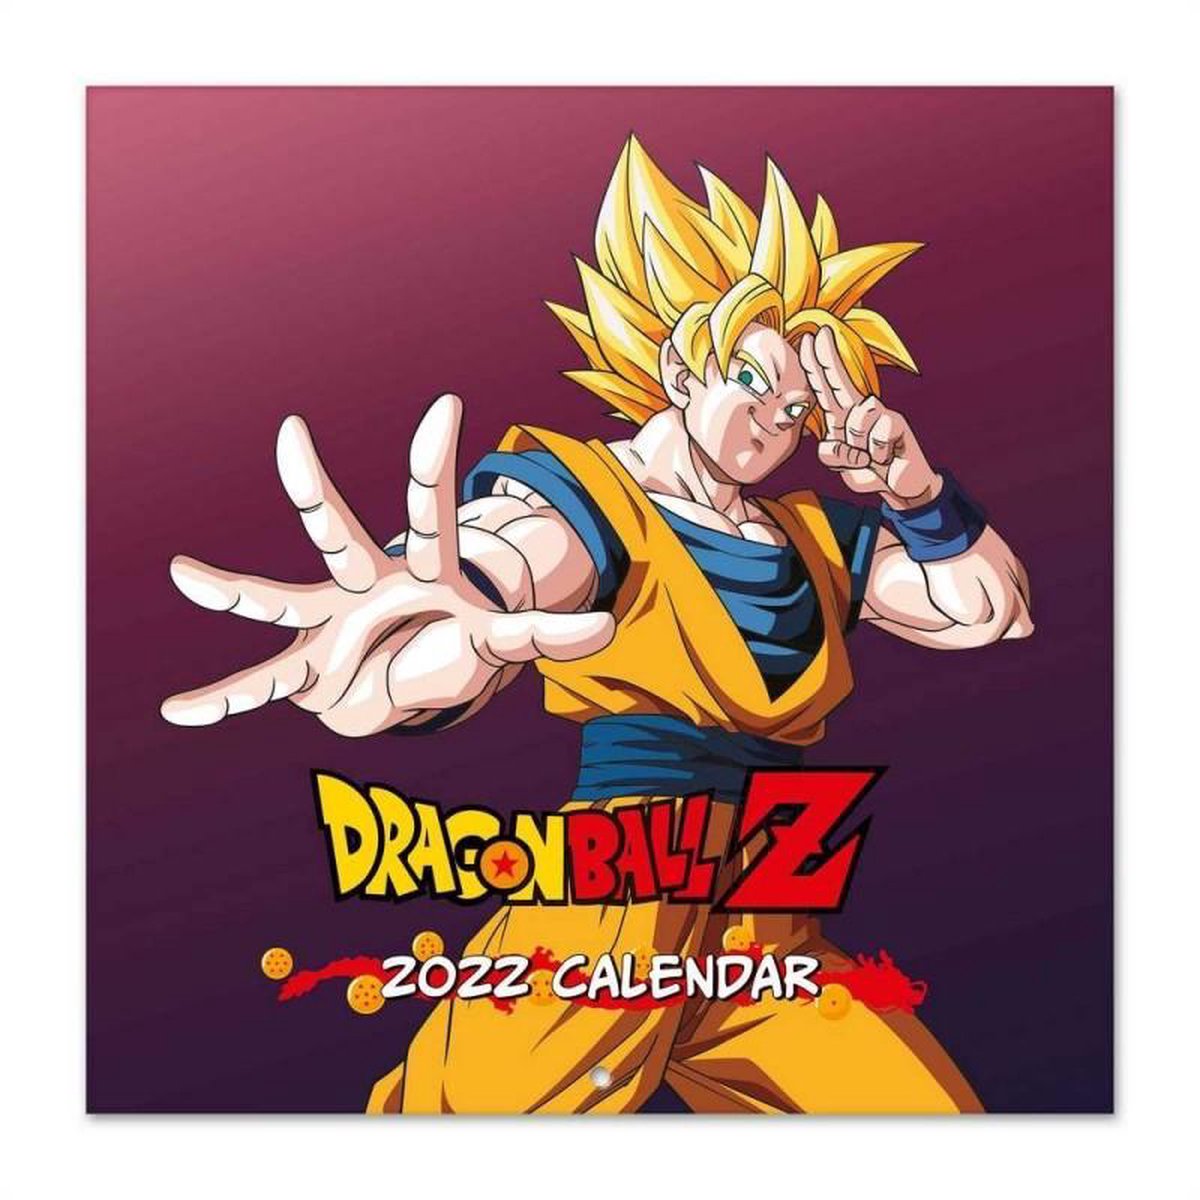 Dragon Ball Z kalender 2022 - Manga - anime - Japans - Son Goku - formaat 30x30 cm